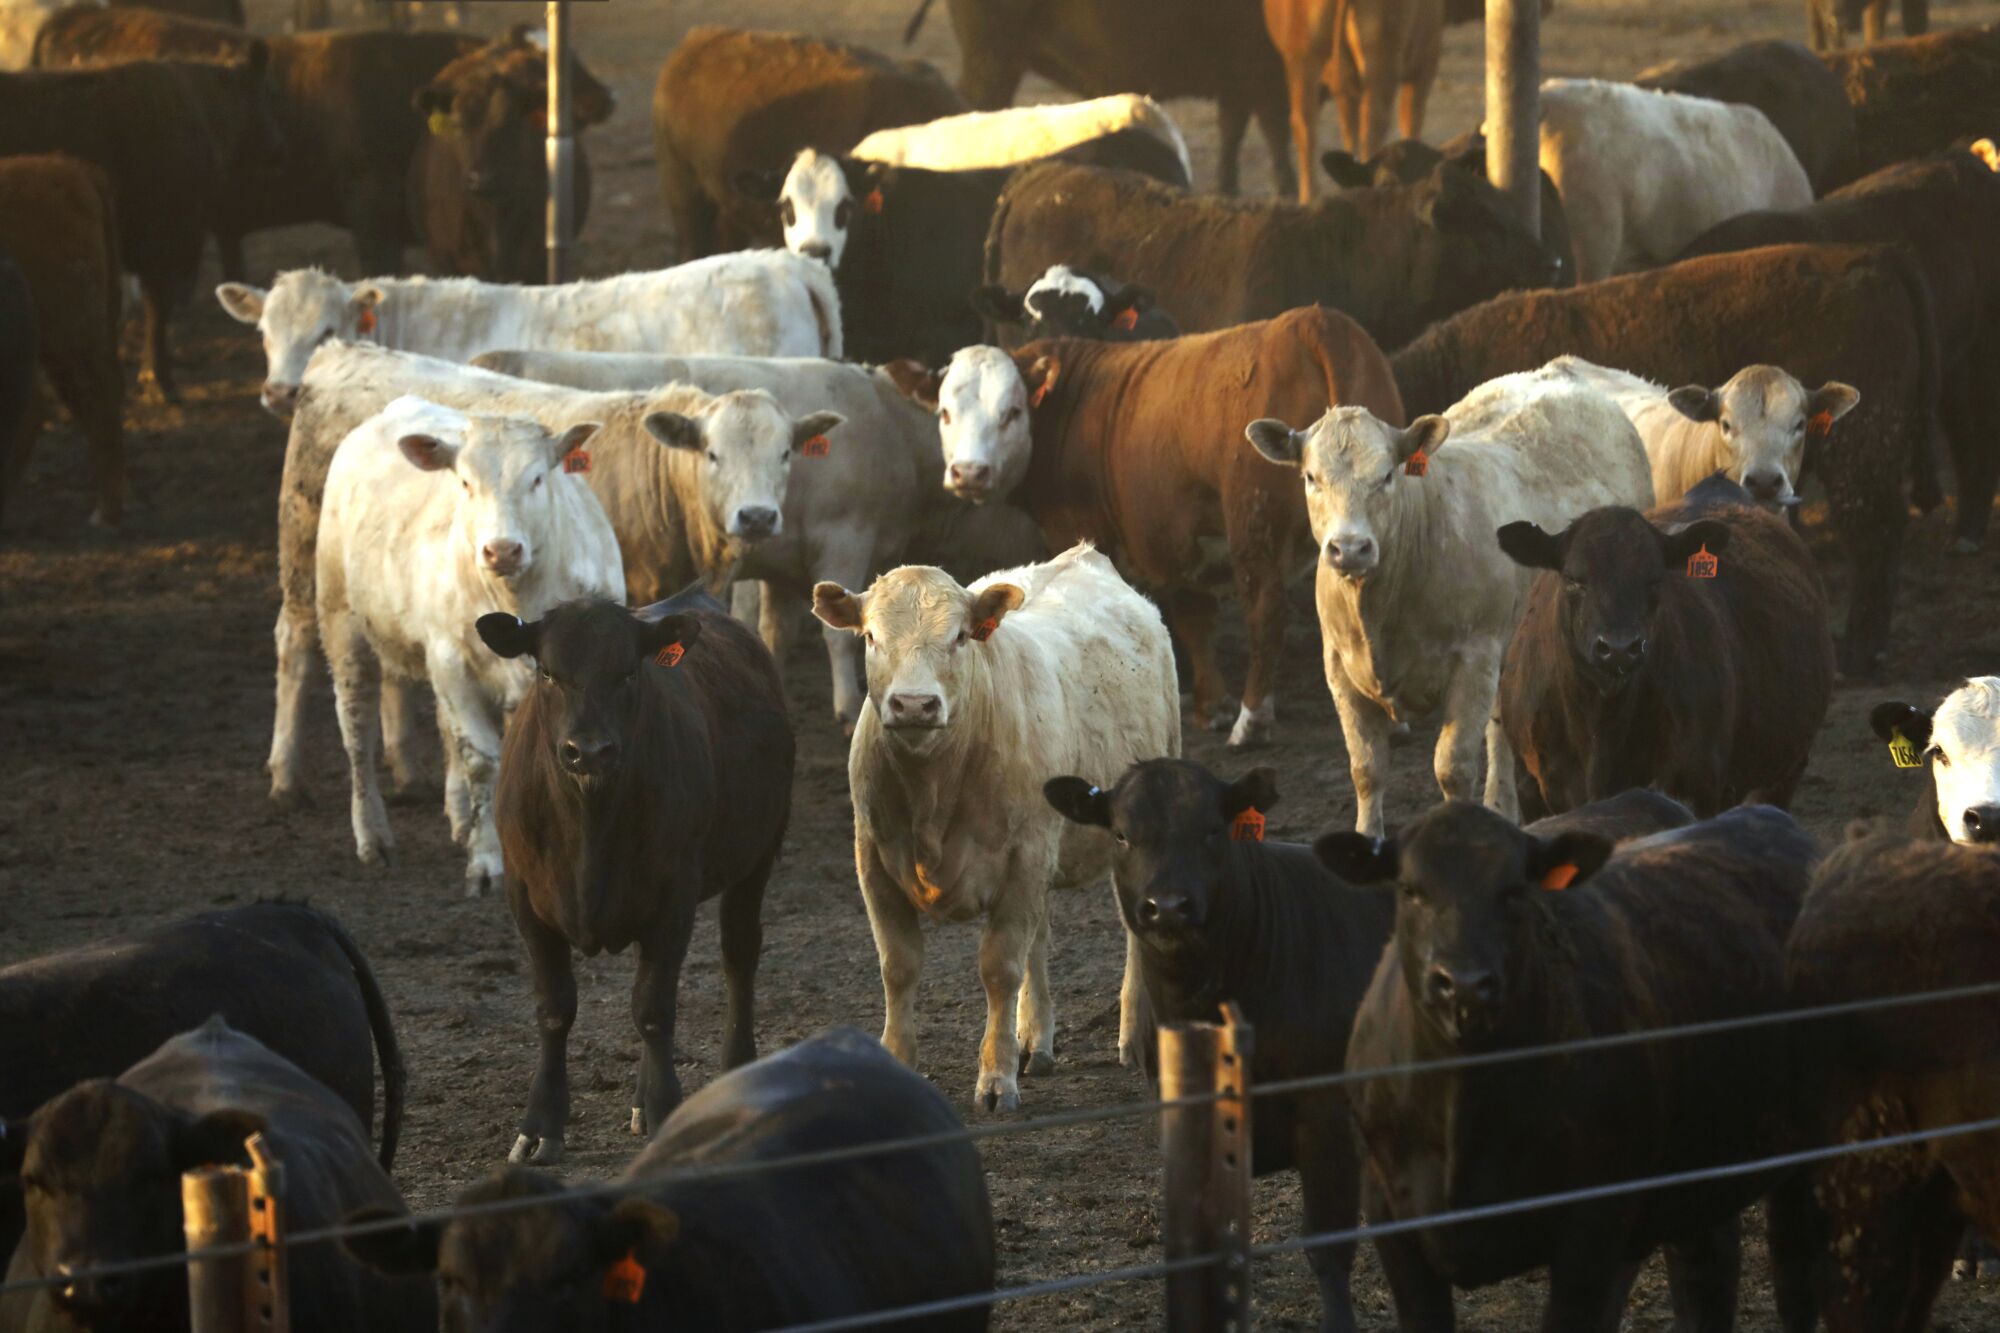 Cattle at Harris Feeding Company